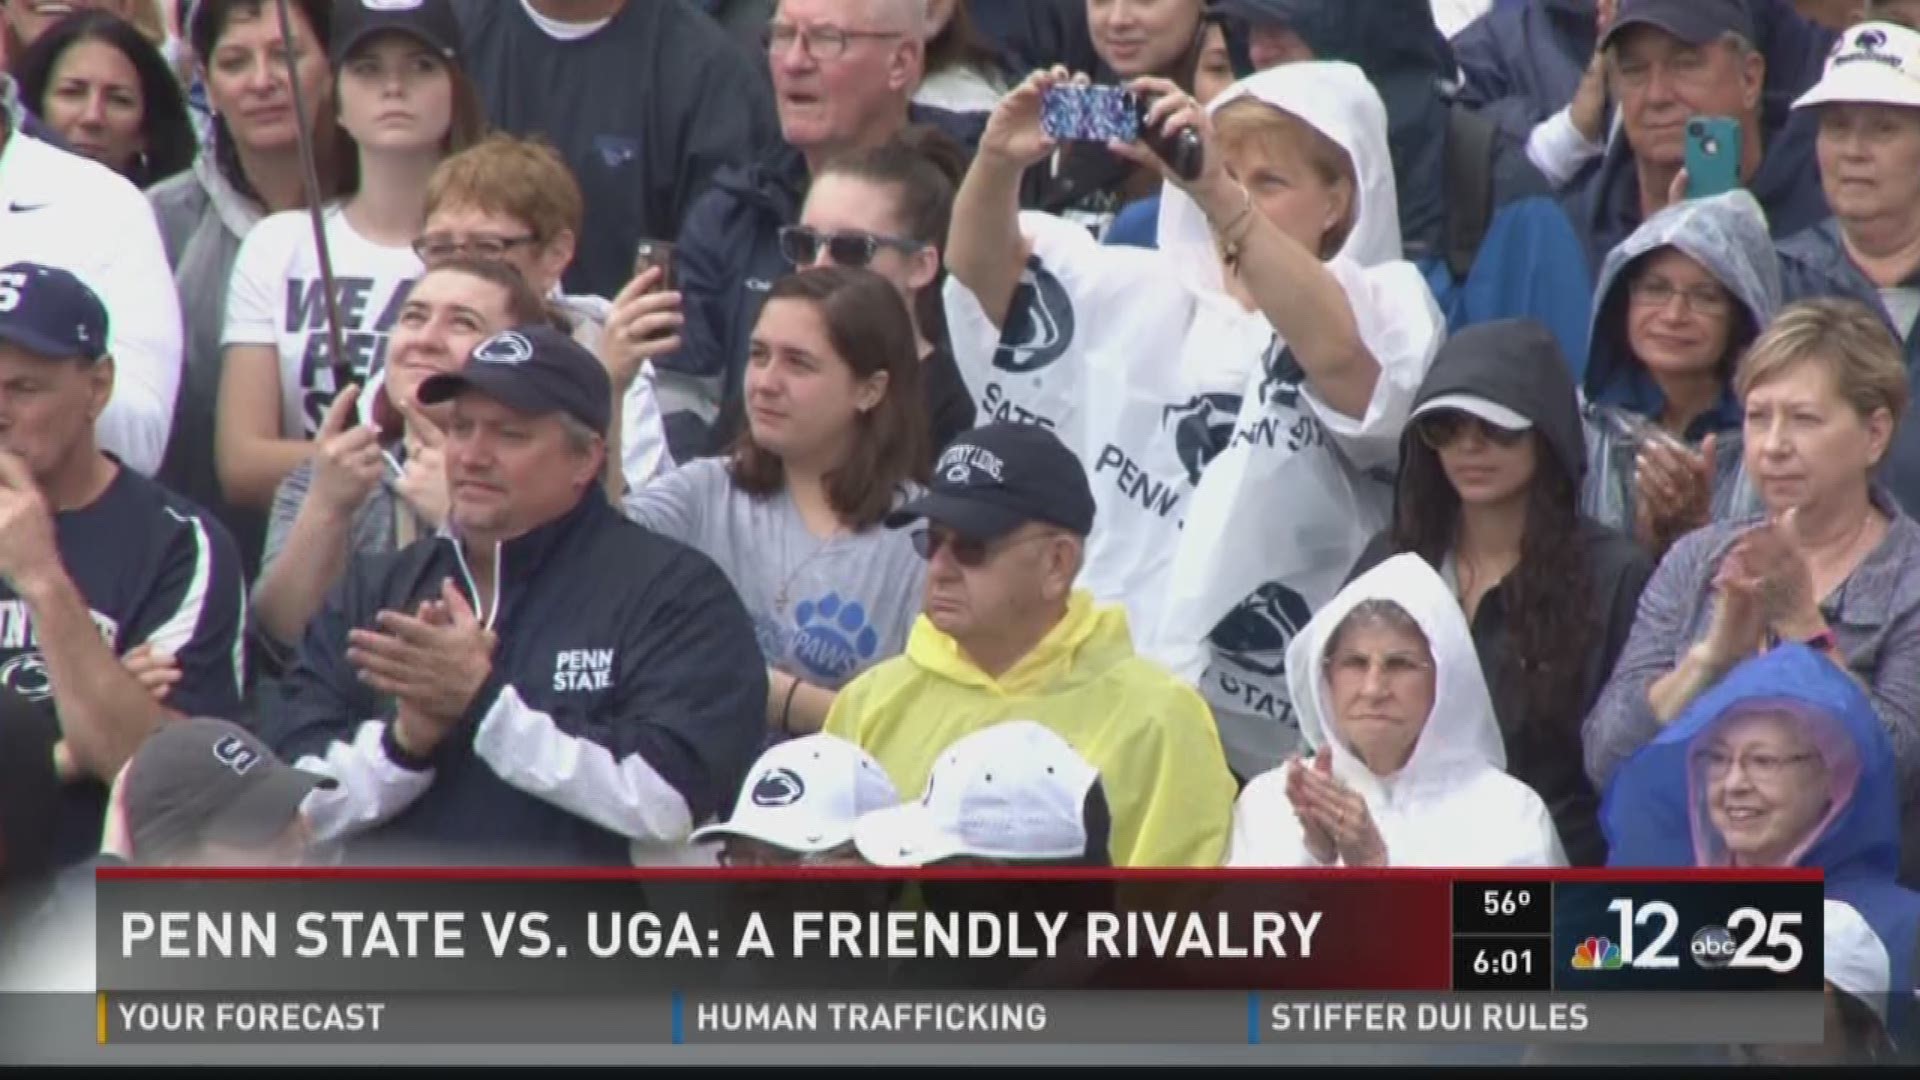 Penn State vs. UGA: A friendly rivalry